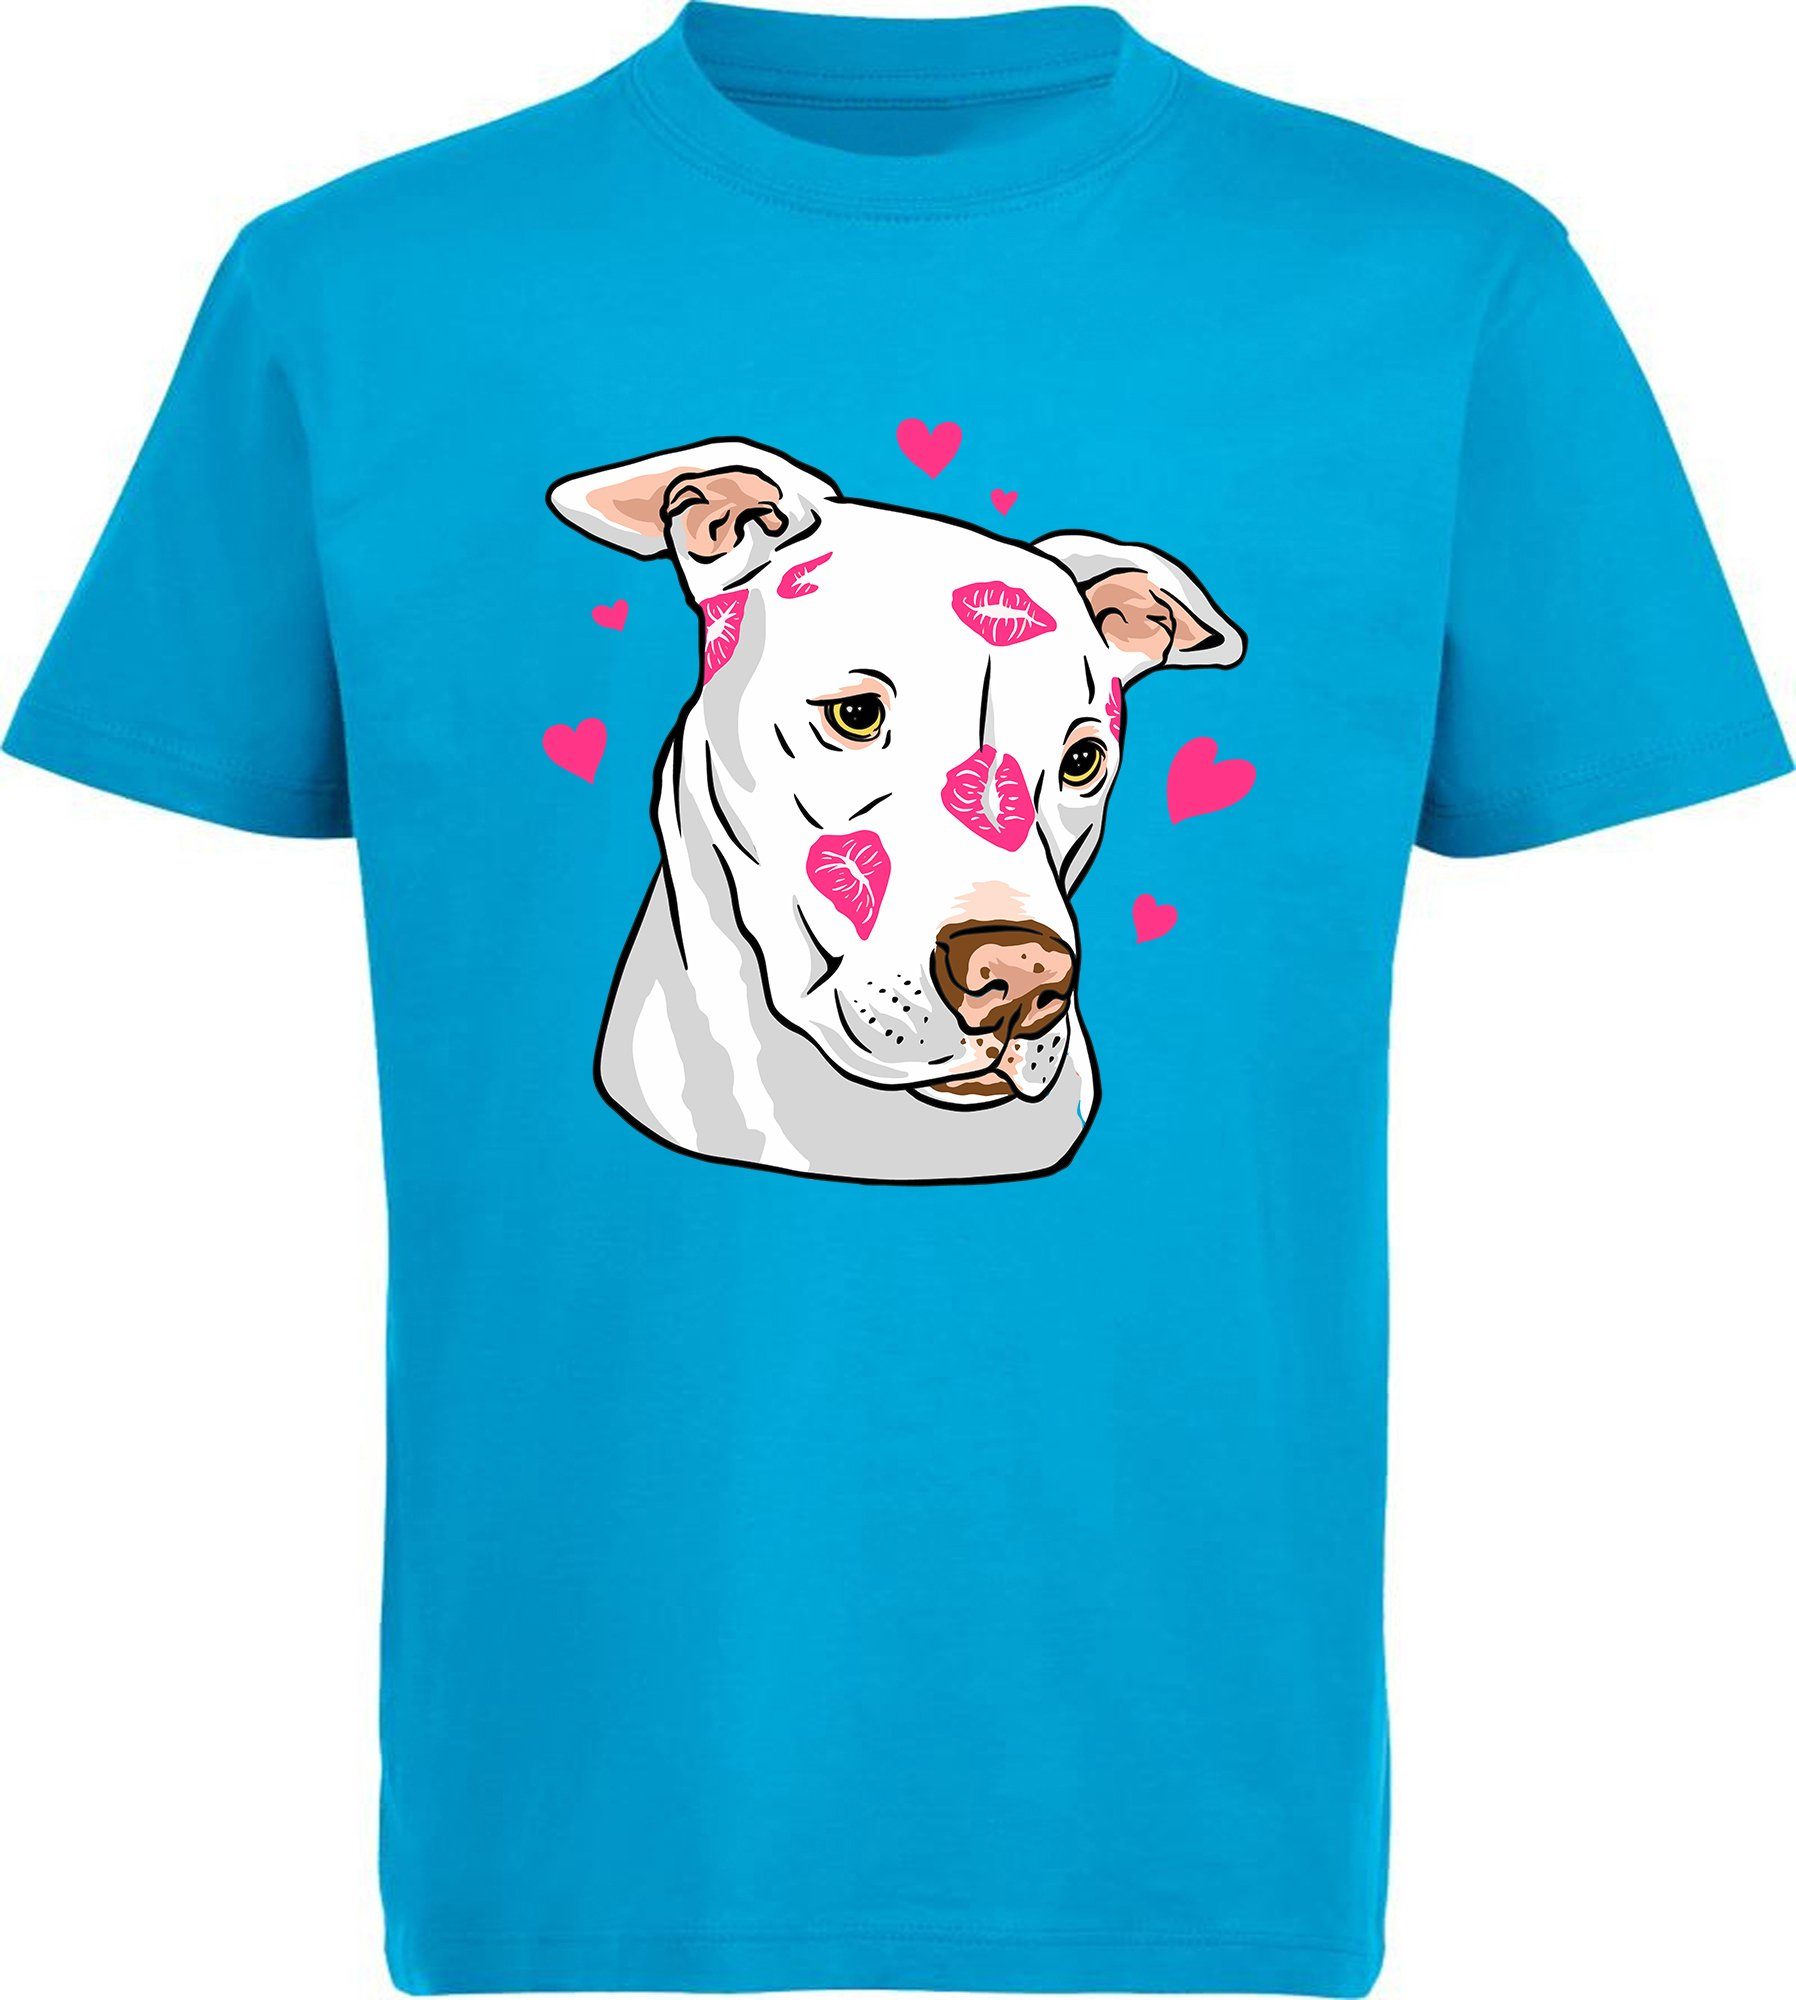 MyDesign24 Print-Shirt bedrucktes Kinder Hunde T-Shirt mit blau i229 Herzen aqua Baumwollshirt mit Aufdruck, Pitbull 